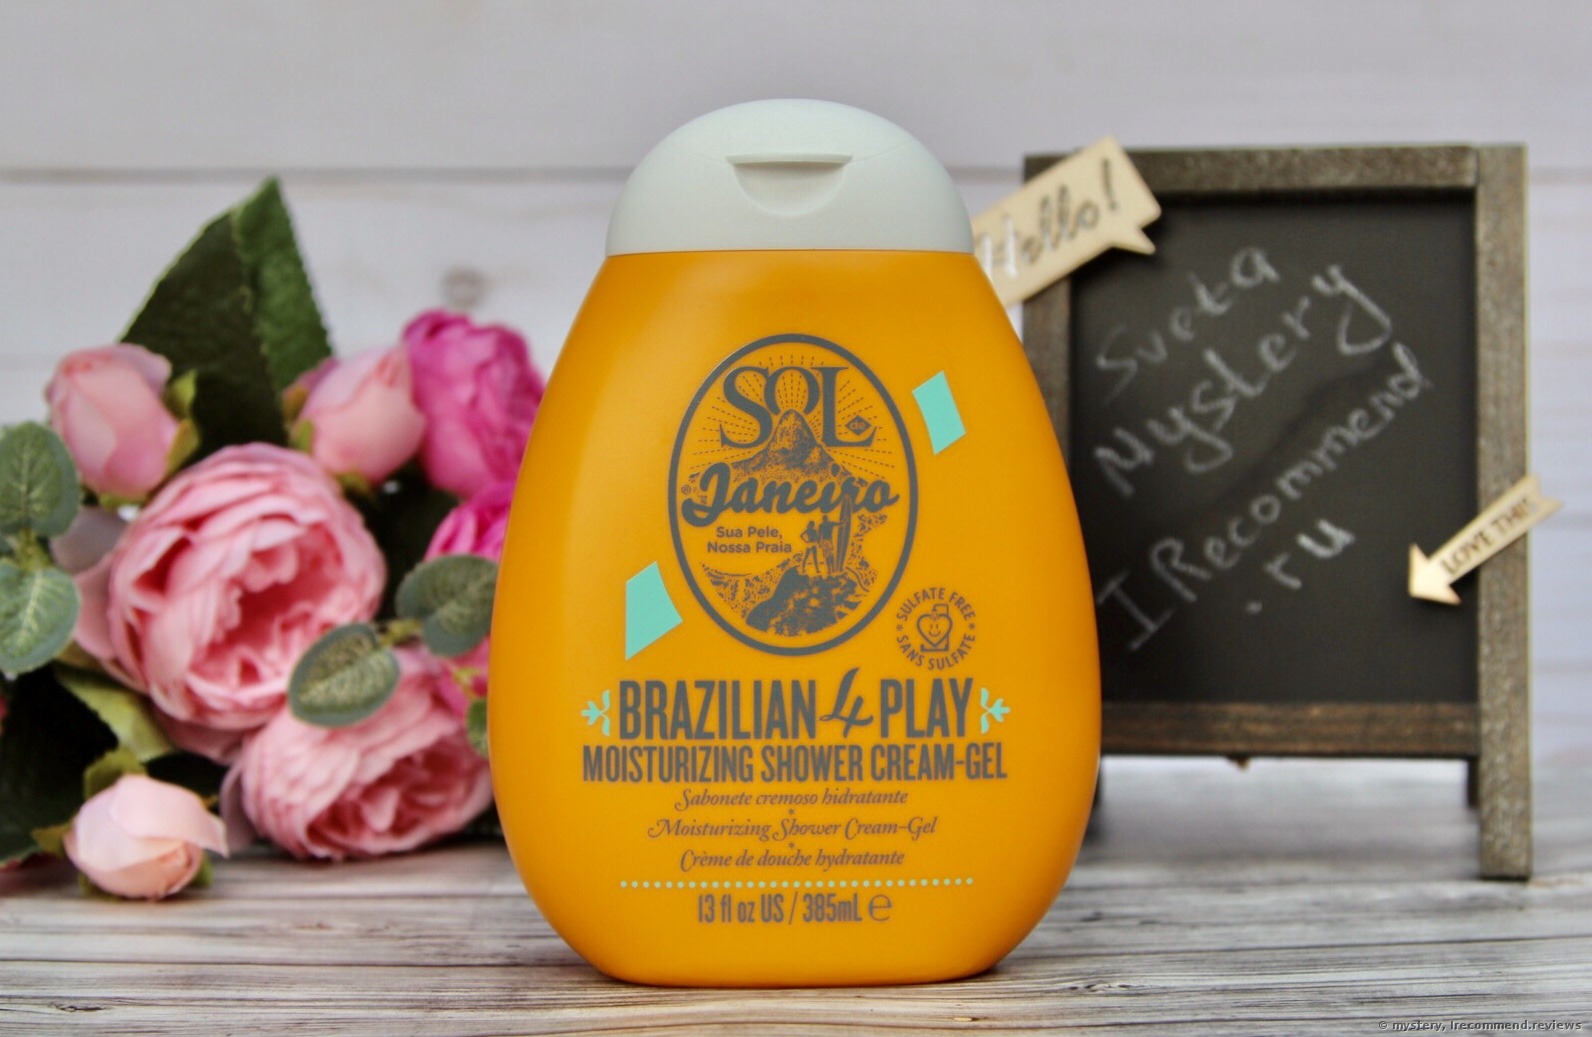 Brazilian 4 Play Moisturizing Shower Cream-Gel